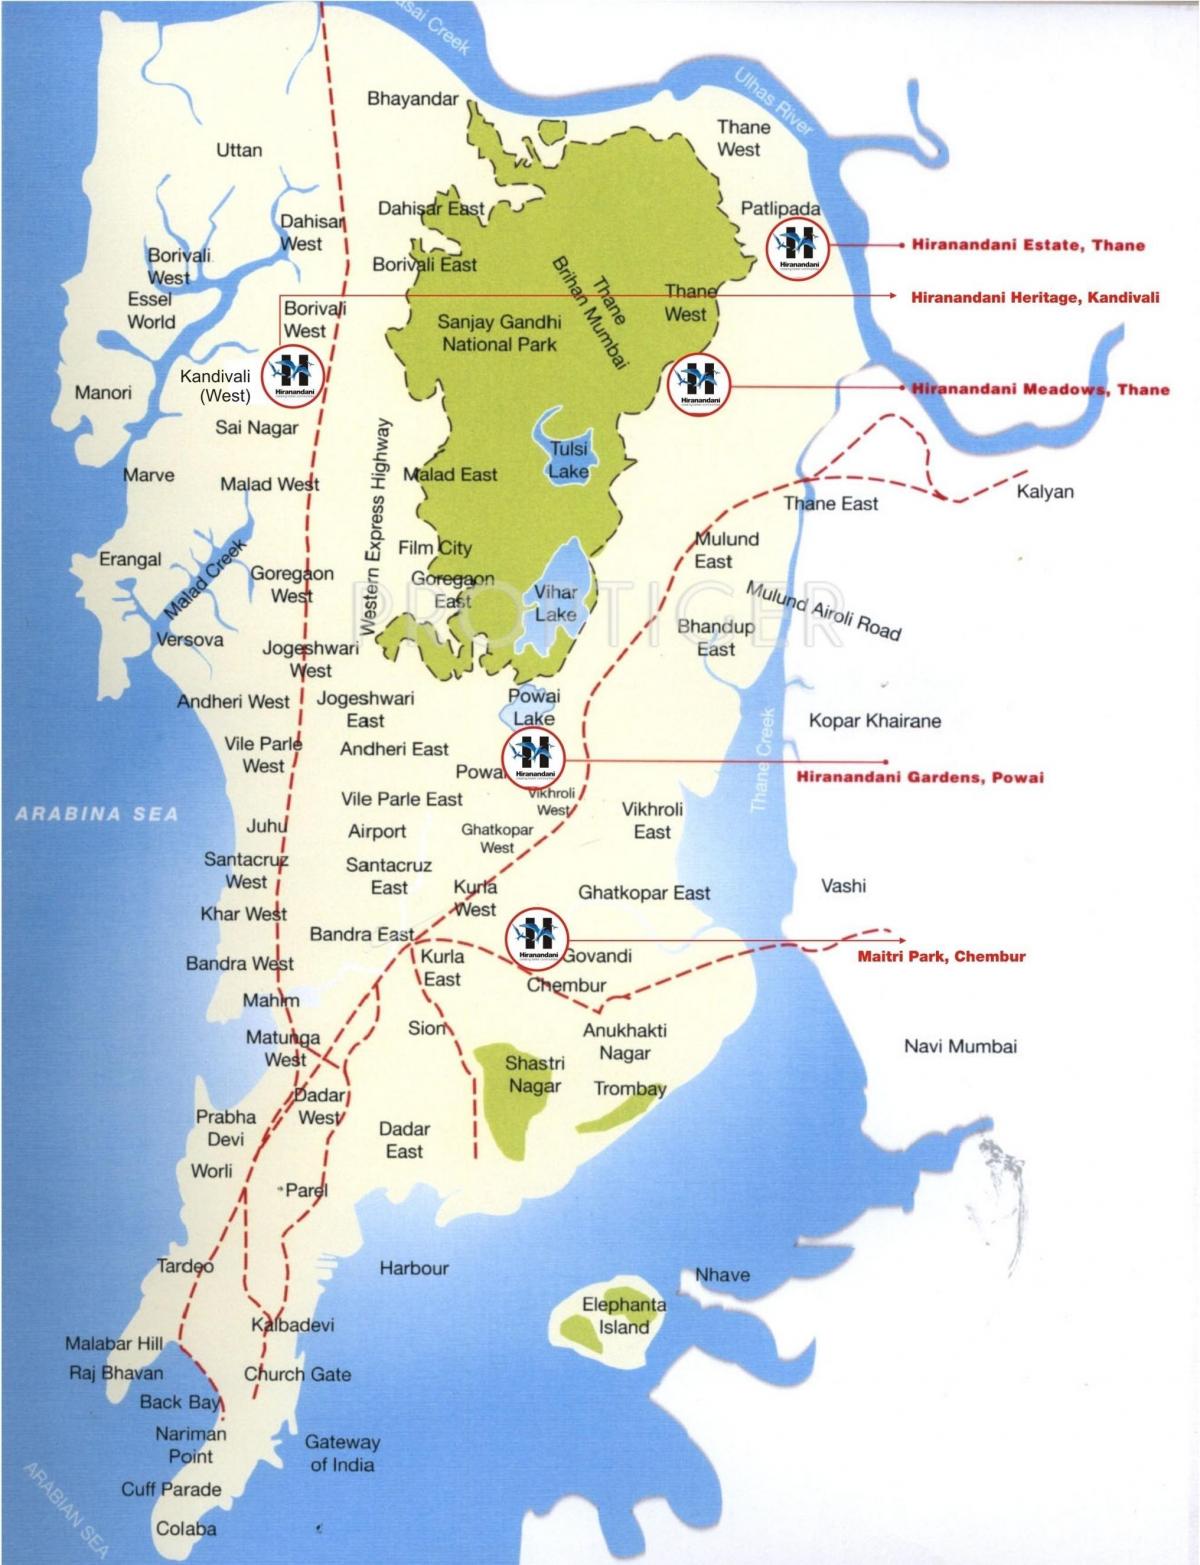 zemljevid Colaba Mumbaju